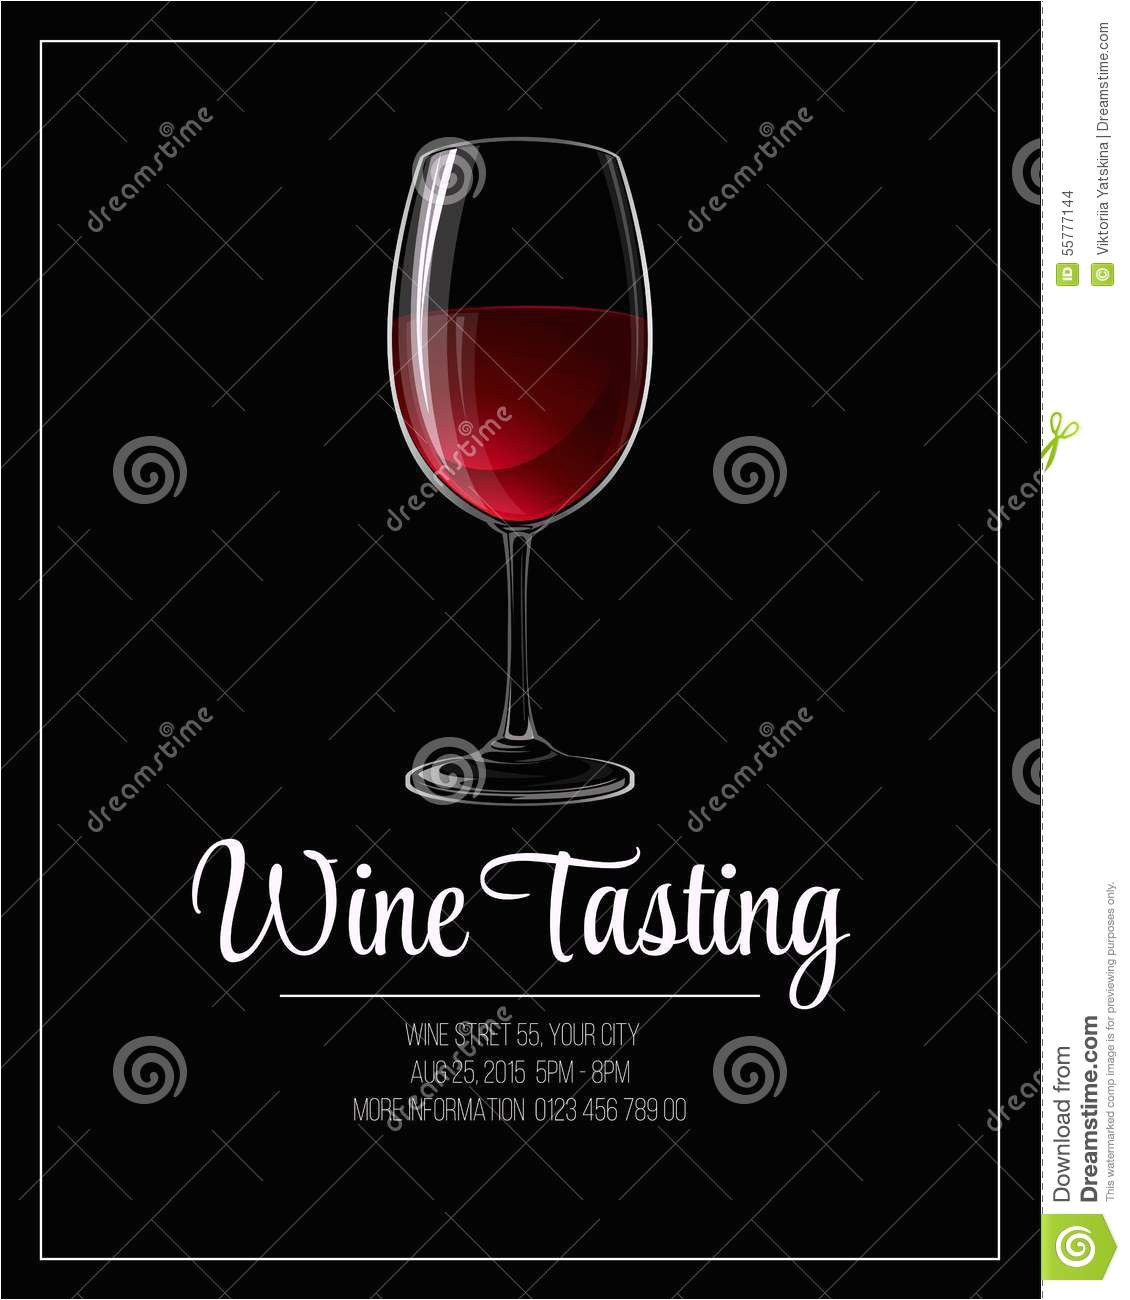 stock illustration wine tasting flyer template vector illustration eps image55777144